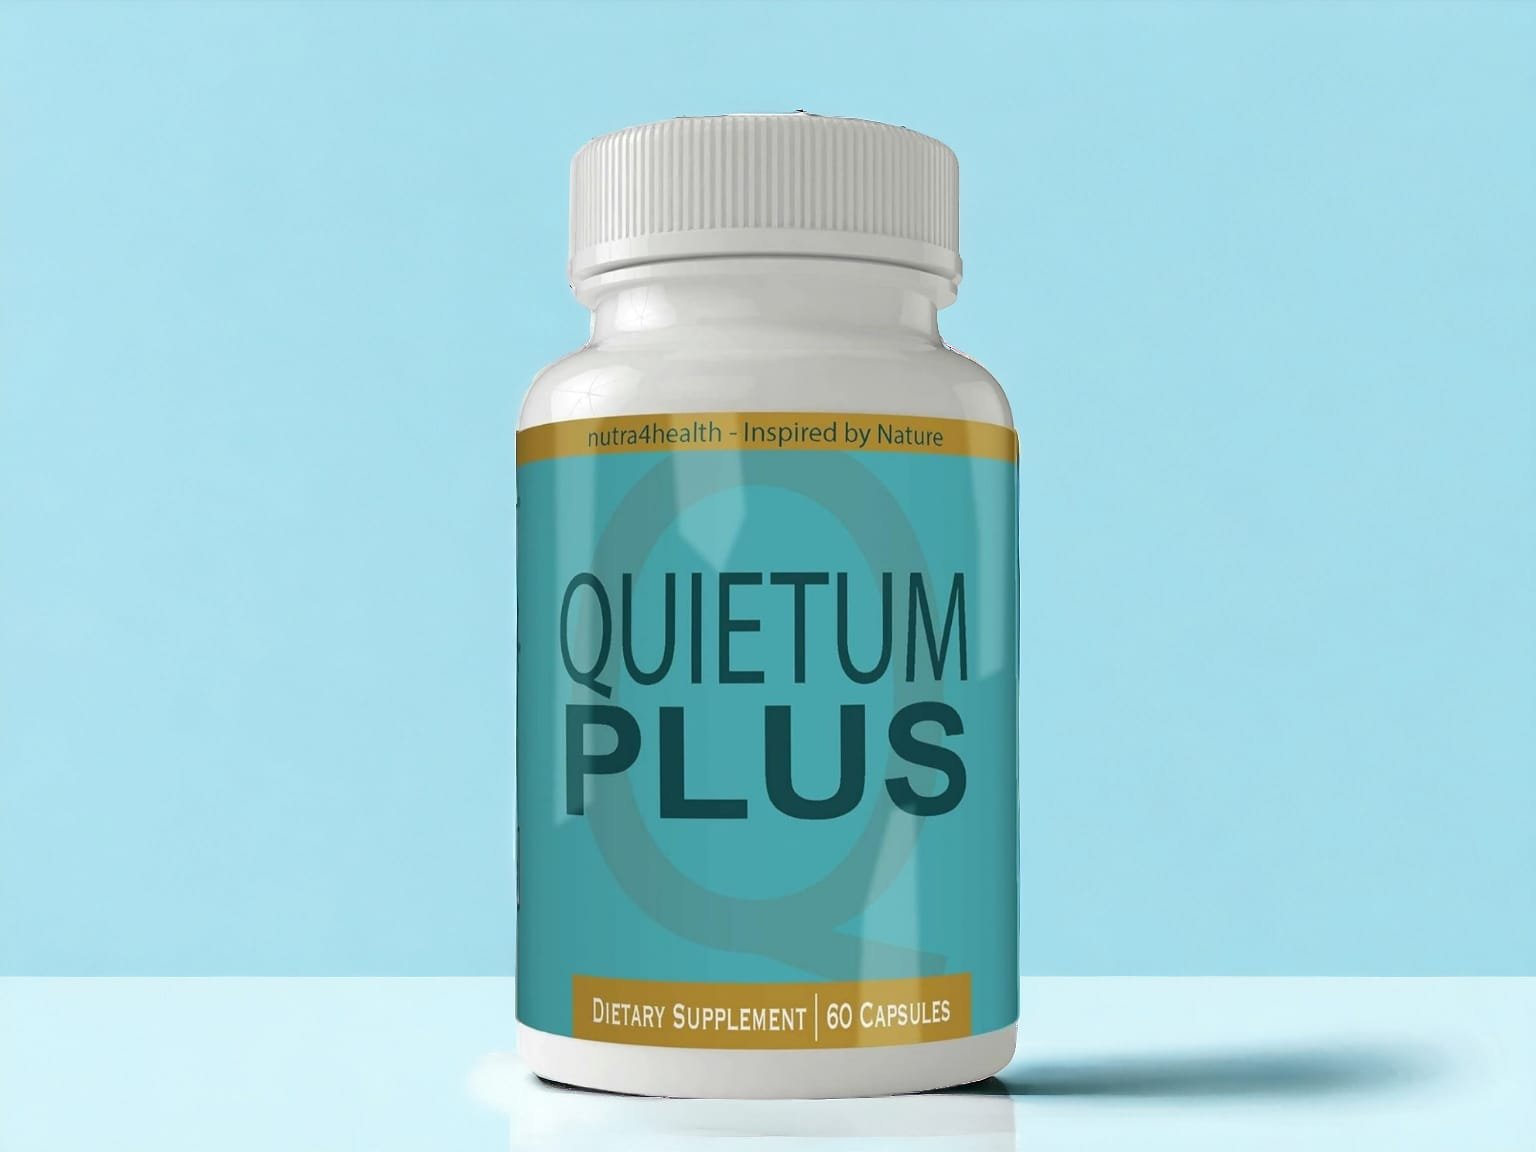 Quietum Plus Negative Review